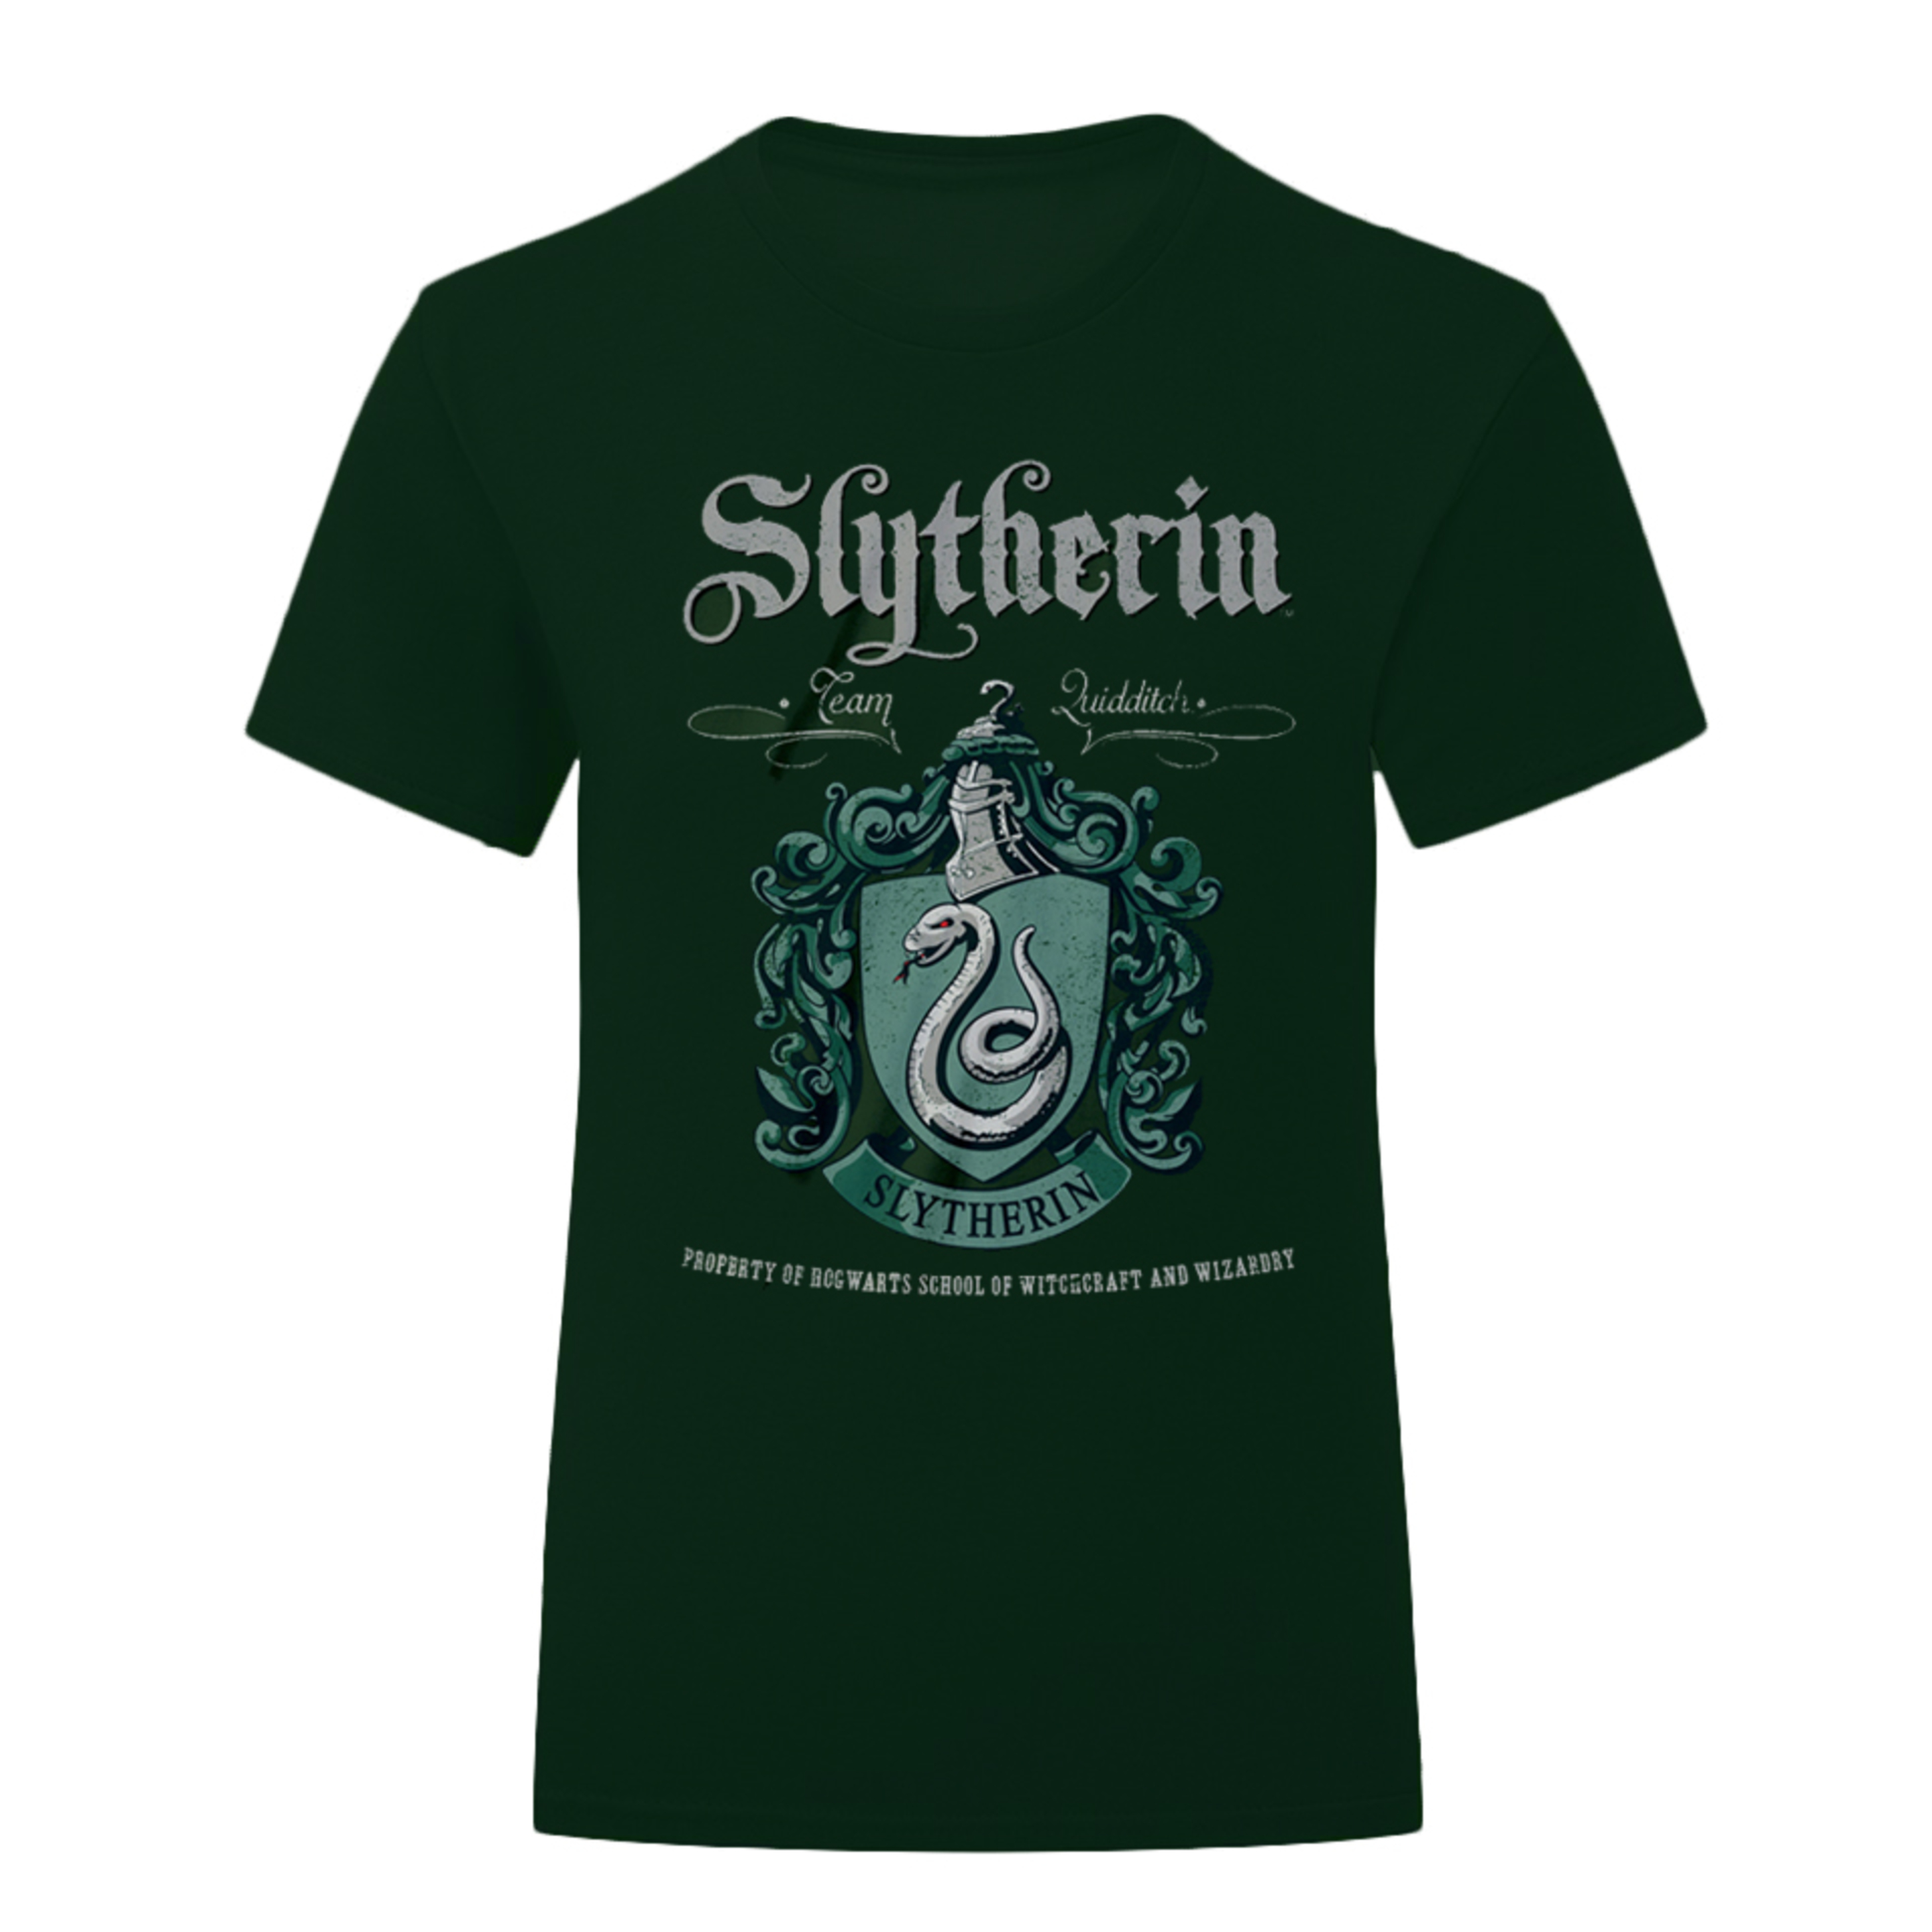 Camiseta De Slytherin Adultos Harry Potter